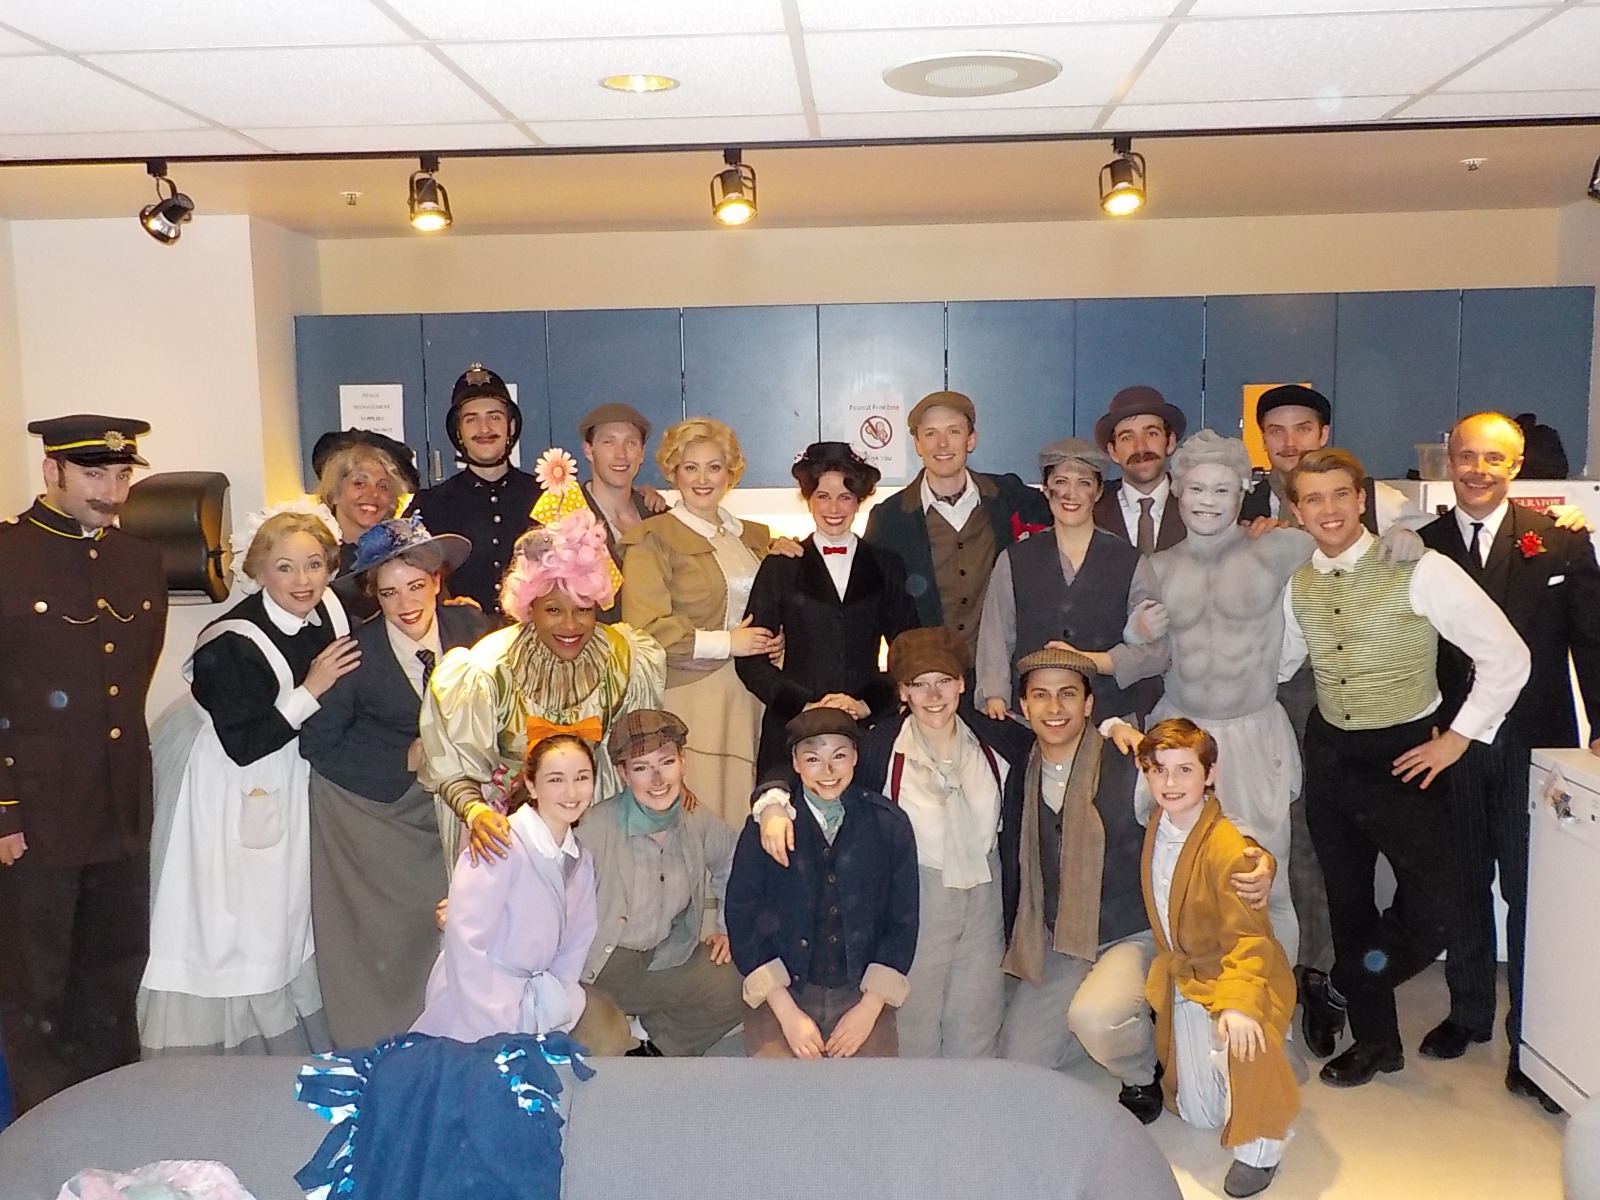 The Company of Mary Poppins (Musical, Halifax, Nova Scotia). May 2014